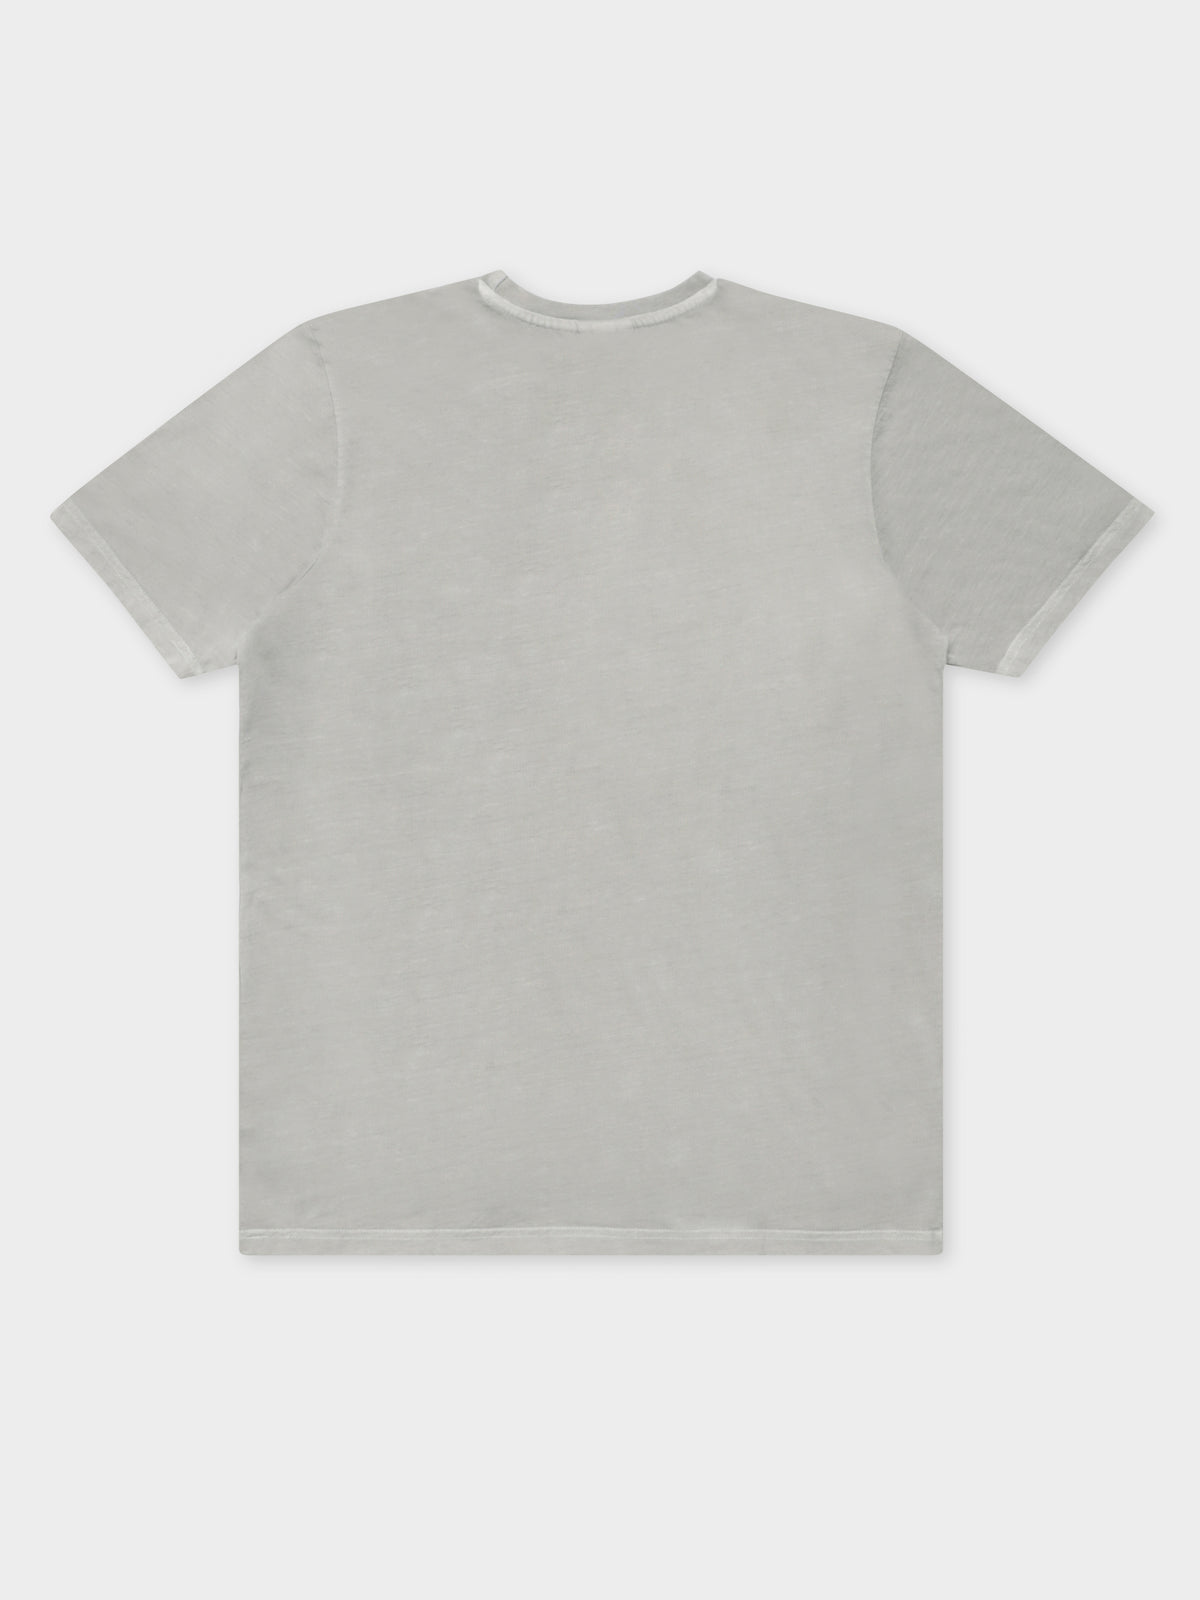 Jourdain T-Shirt in Grey